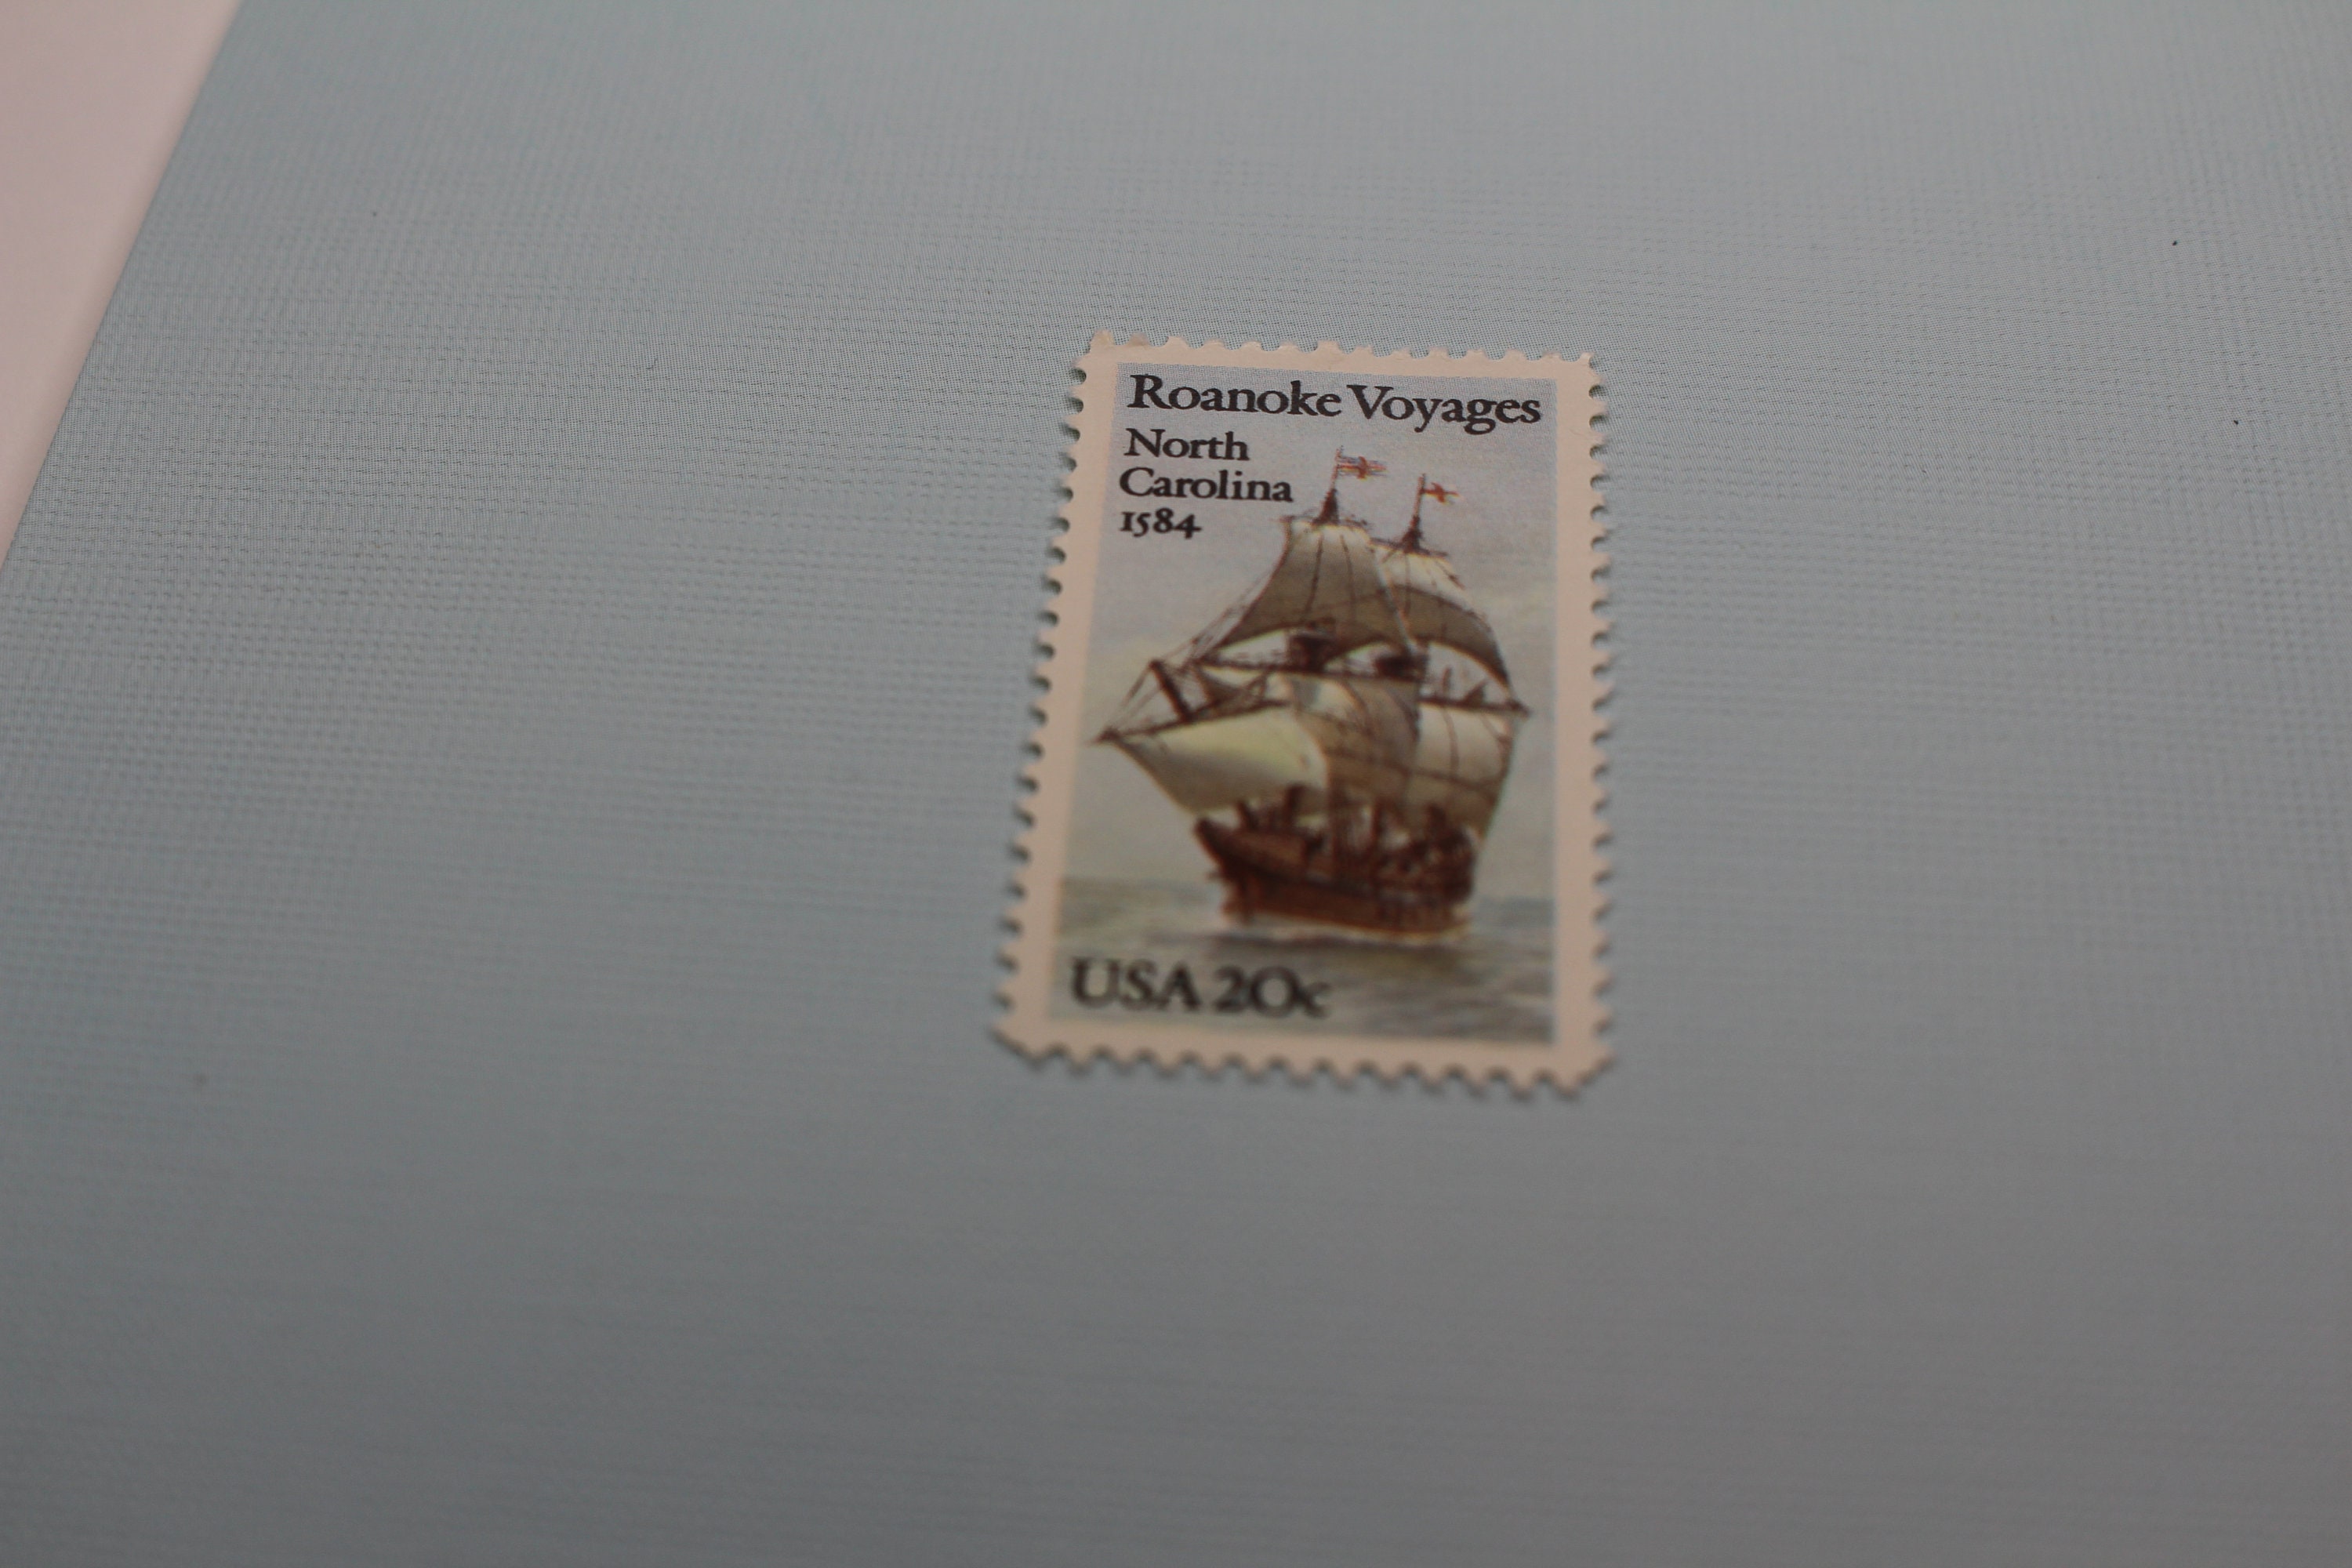 roanoke-voyages-north-carolina-1584-us-20c-postage-stamps-etsy